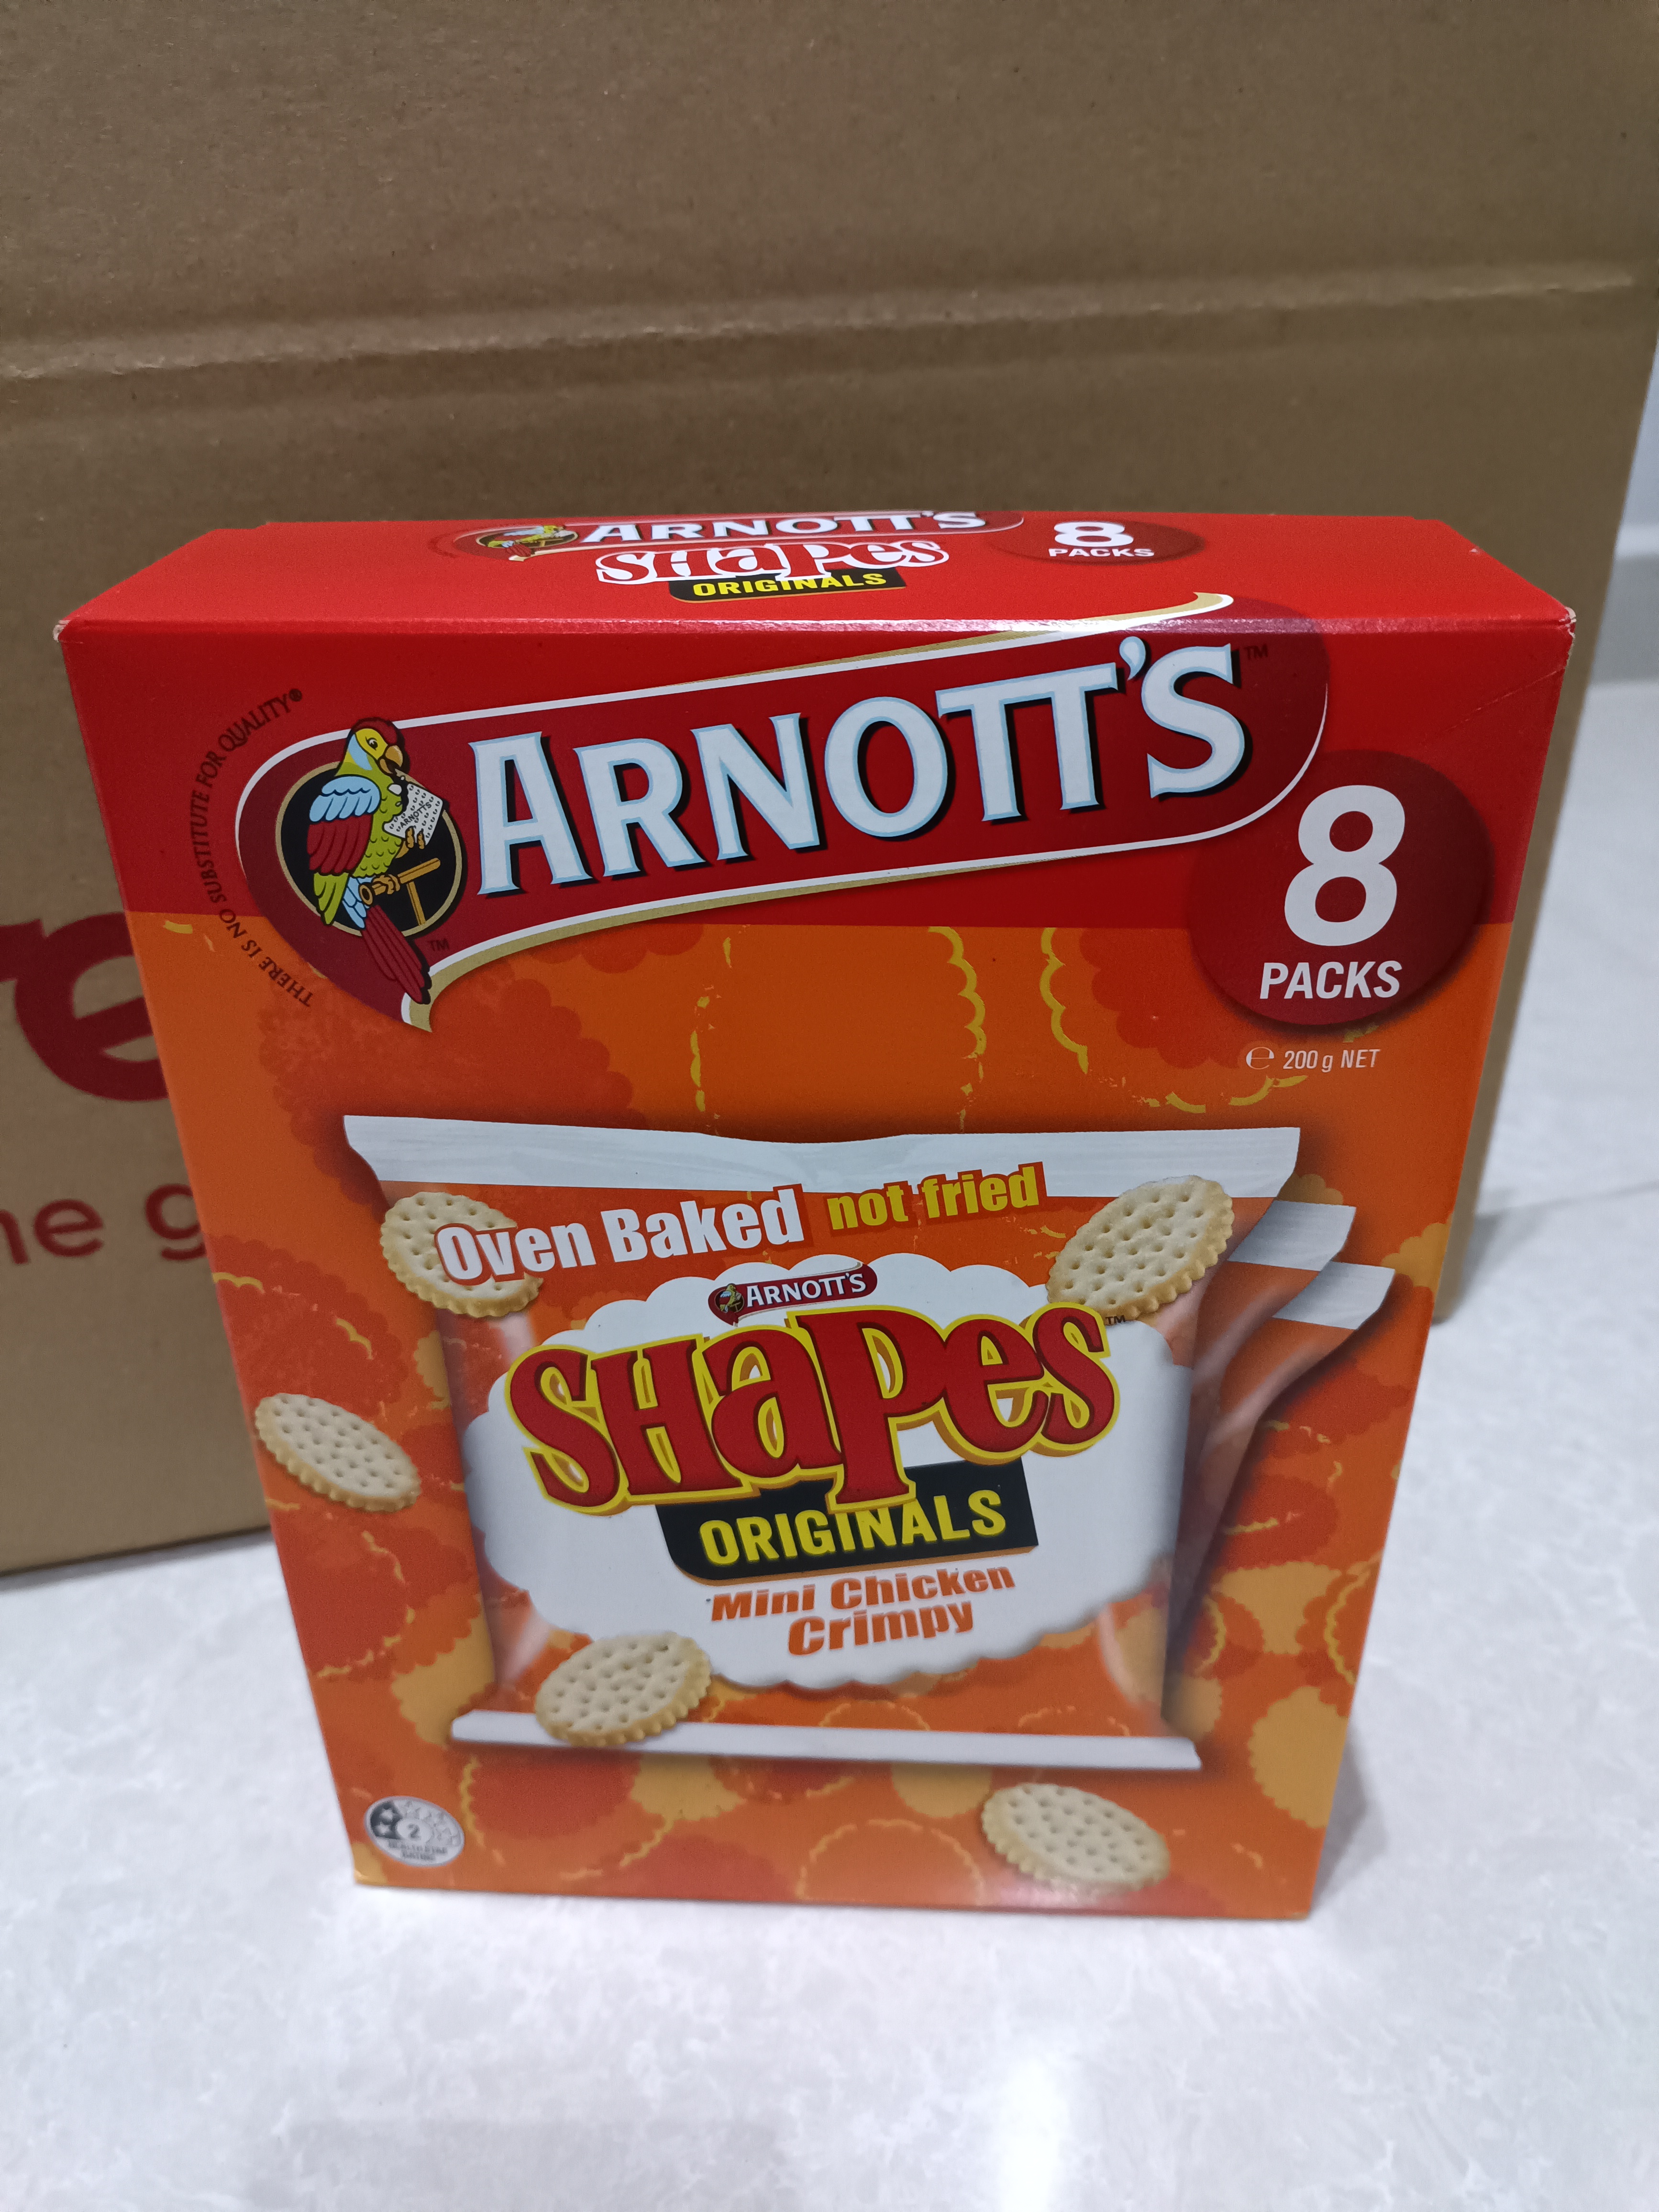 FreshChoice Merivale - Arnotts Shapes Multipack Mini Chicken Crimpy 8 Pack